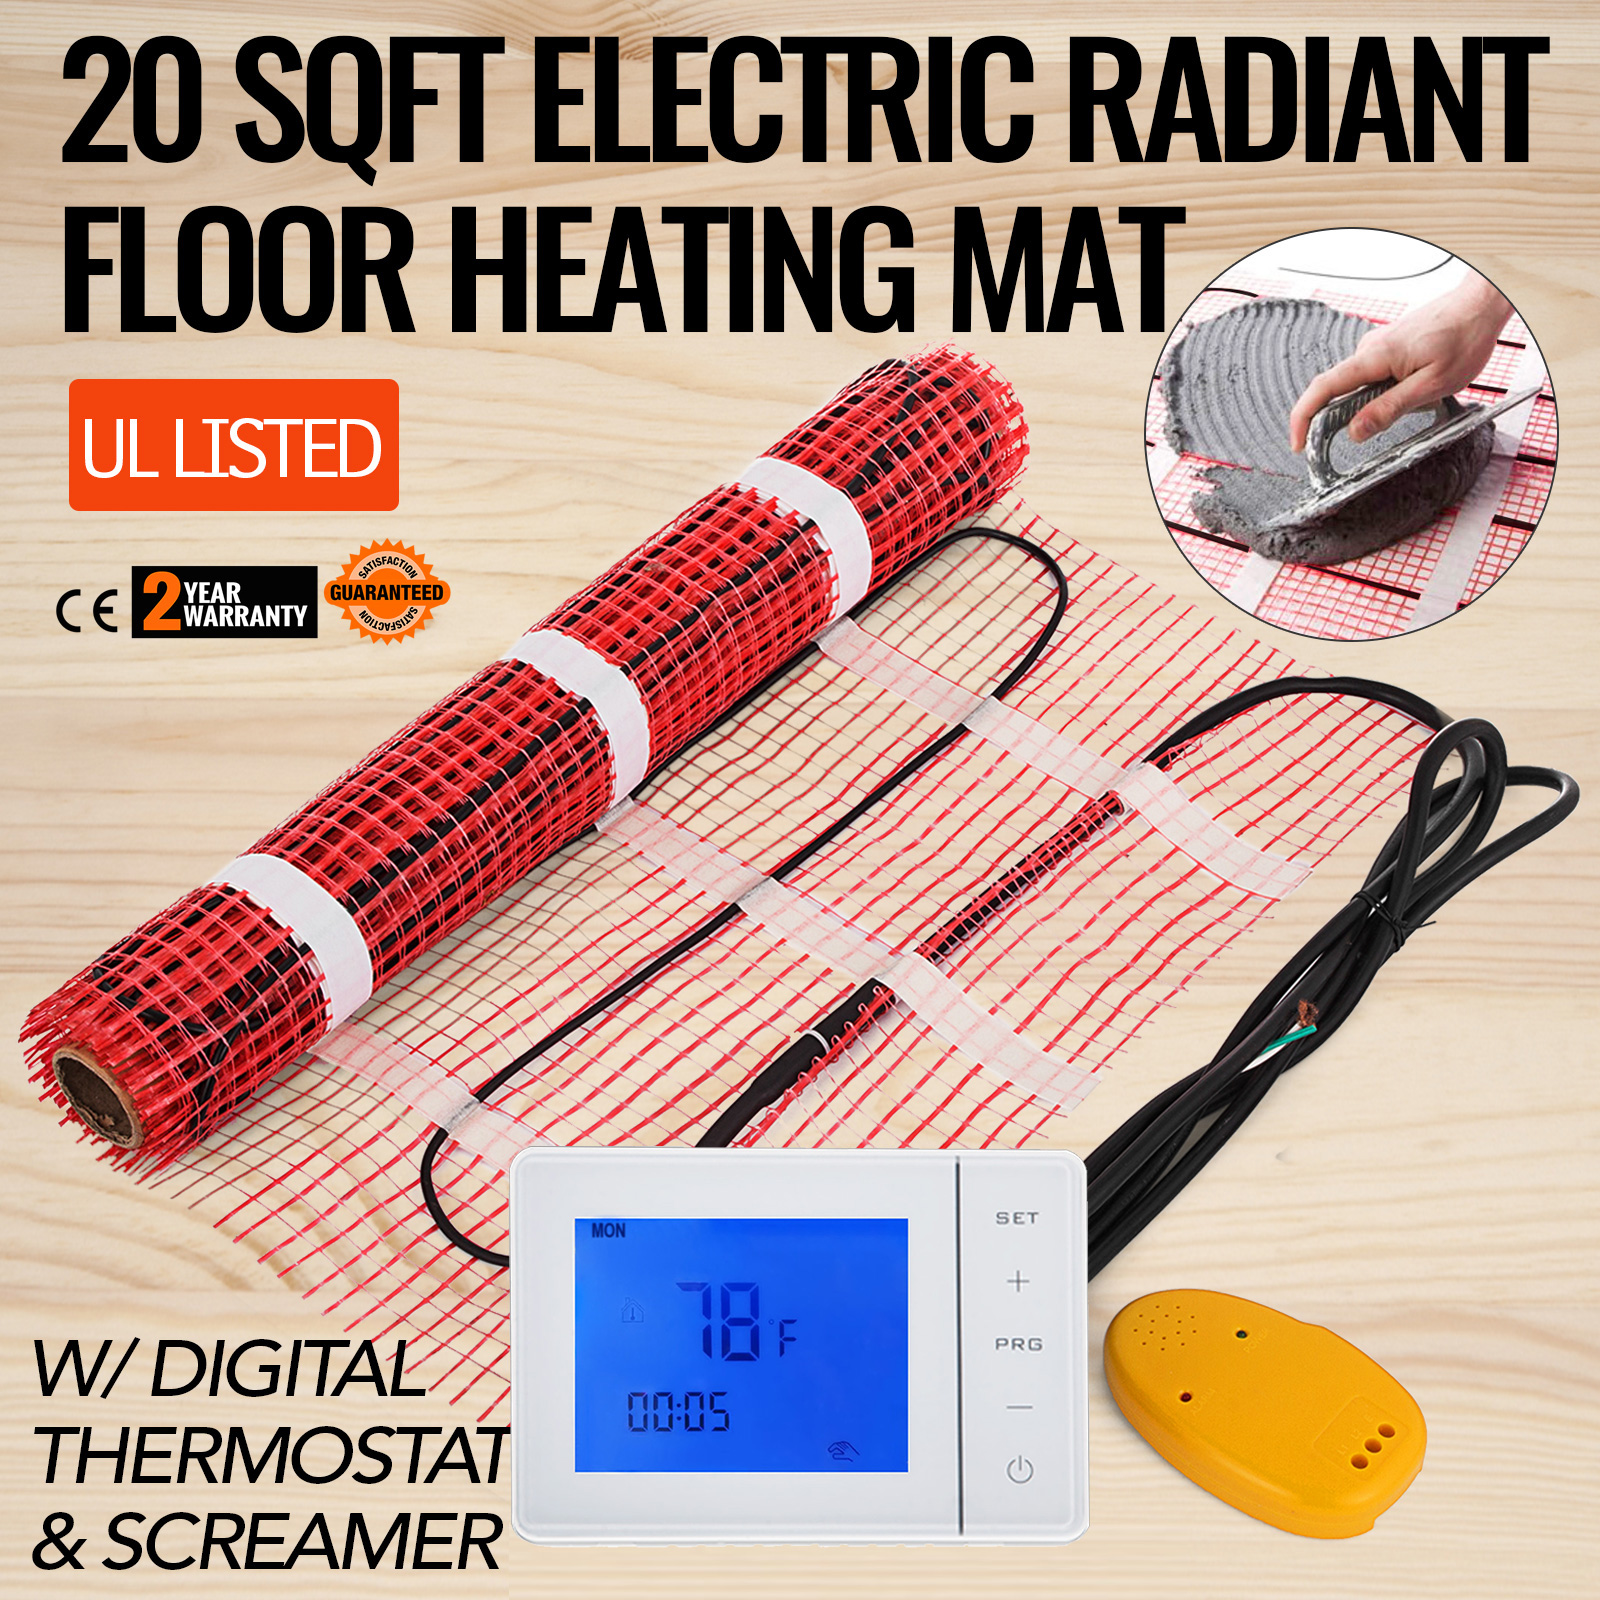 electric radiant floor heating cost calculator